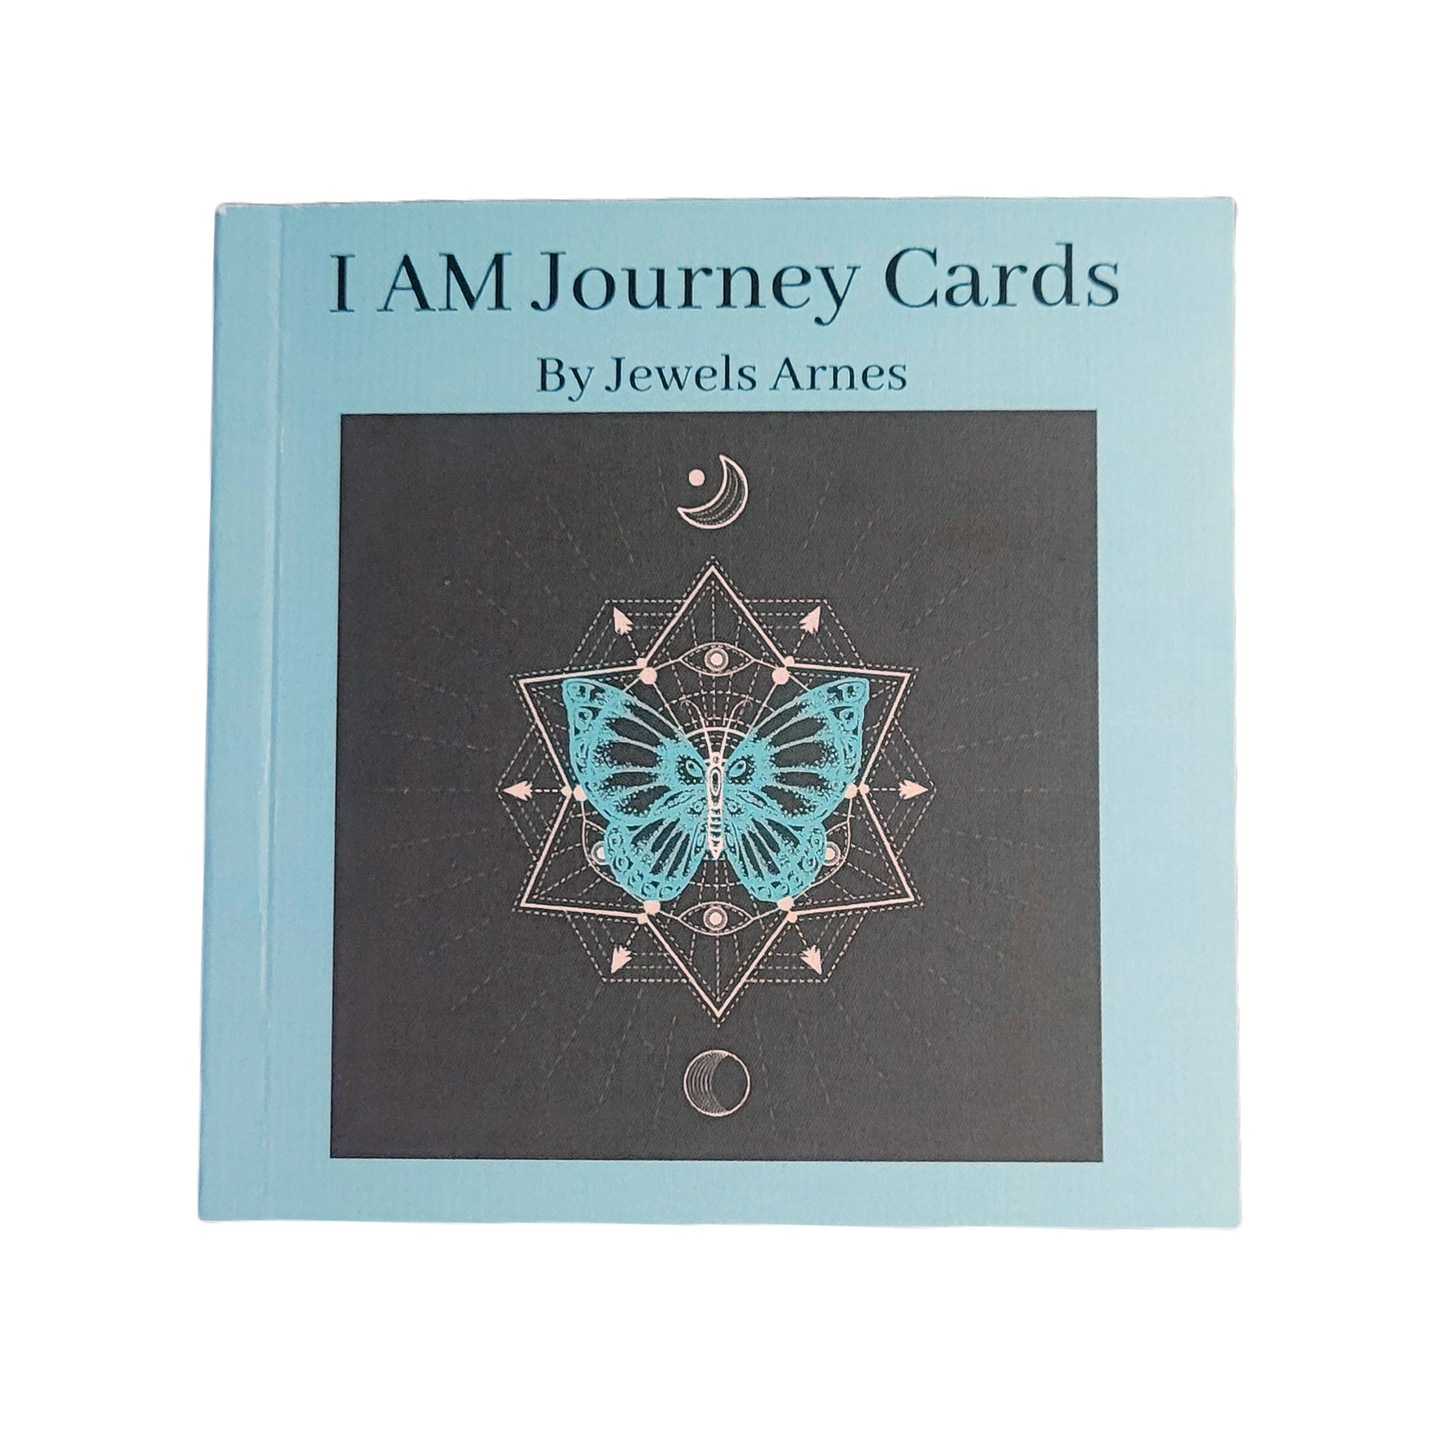 I AM Journey Cards